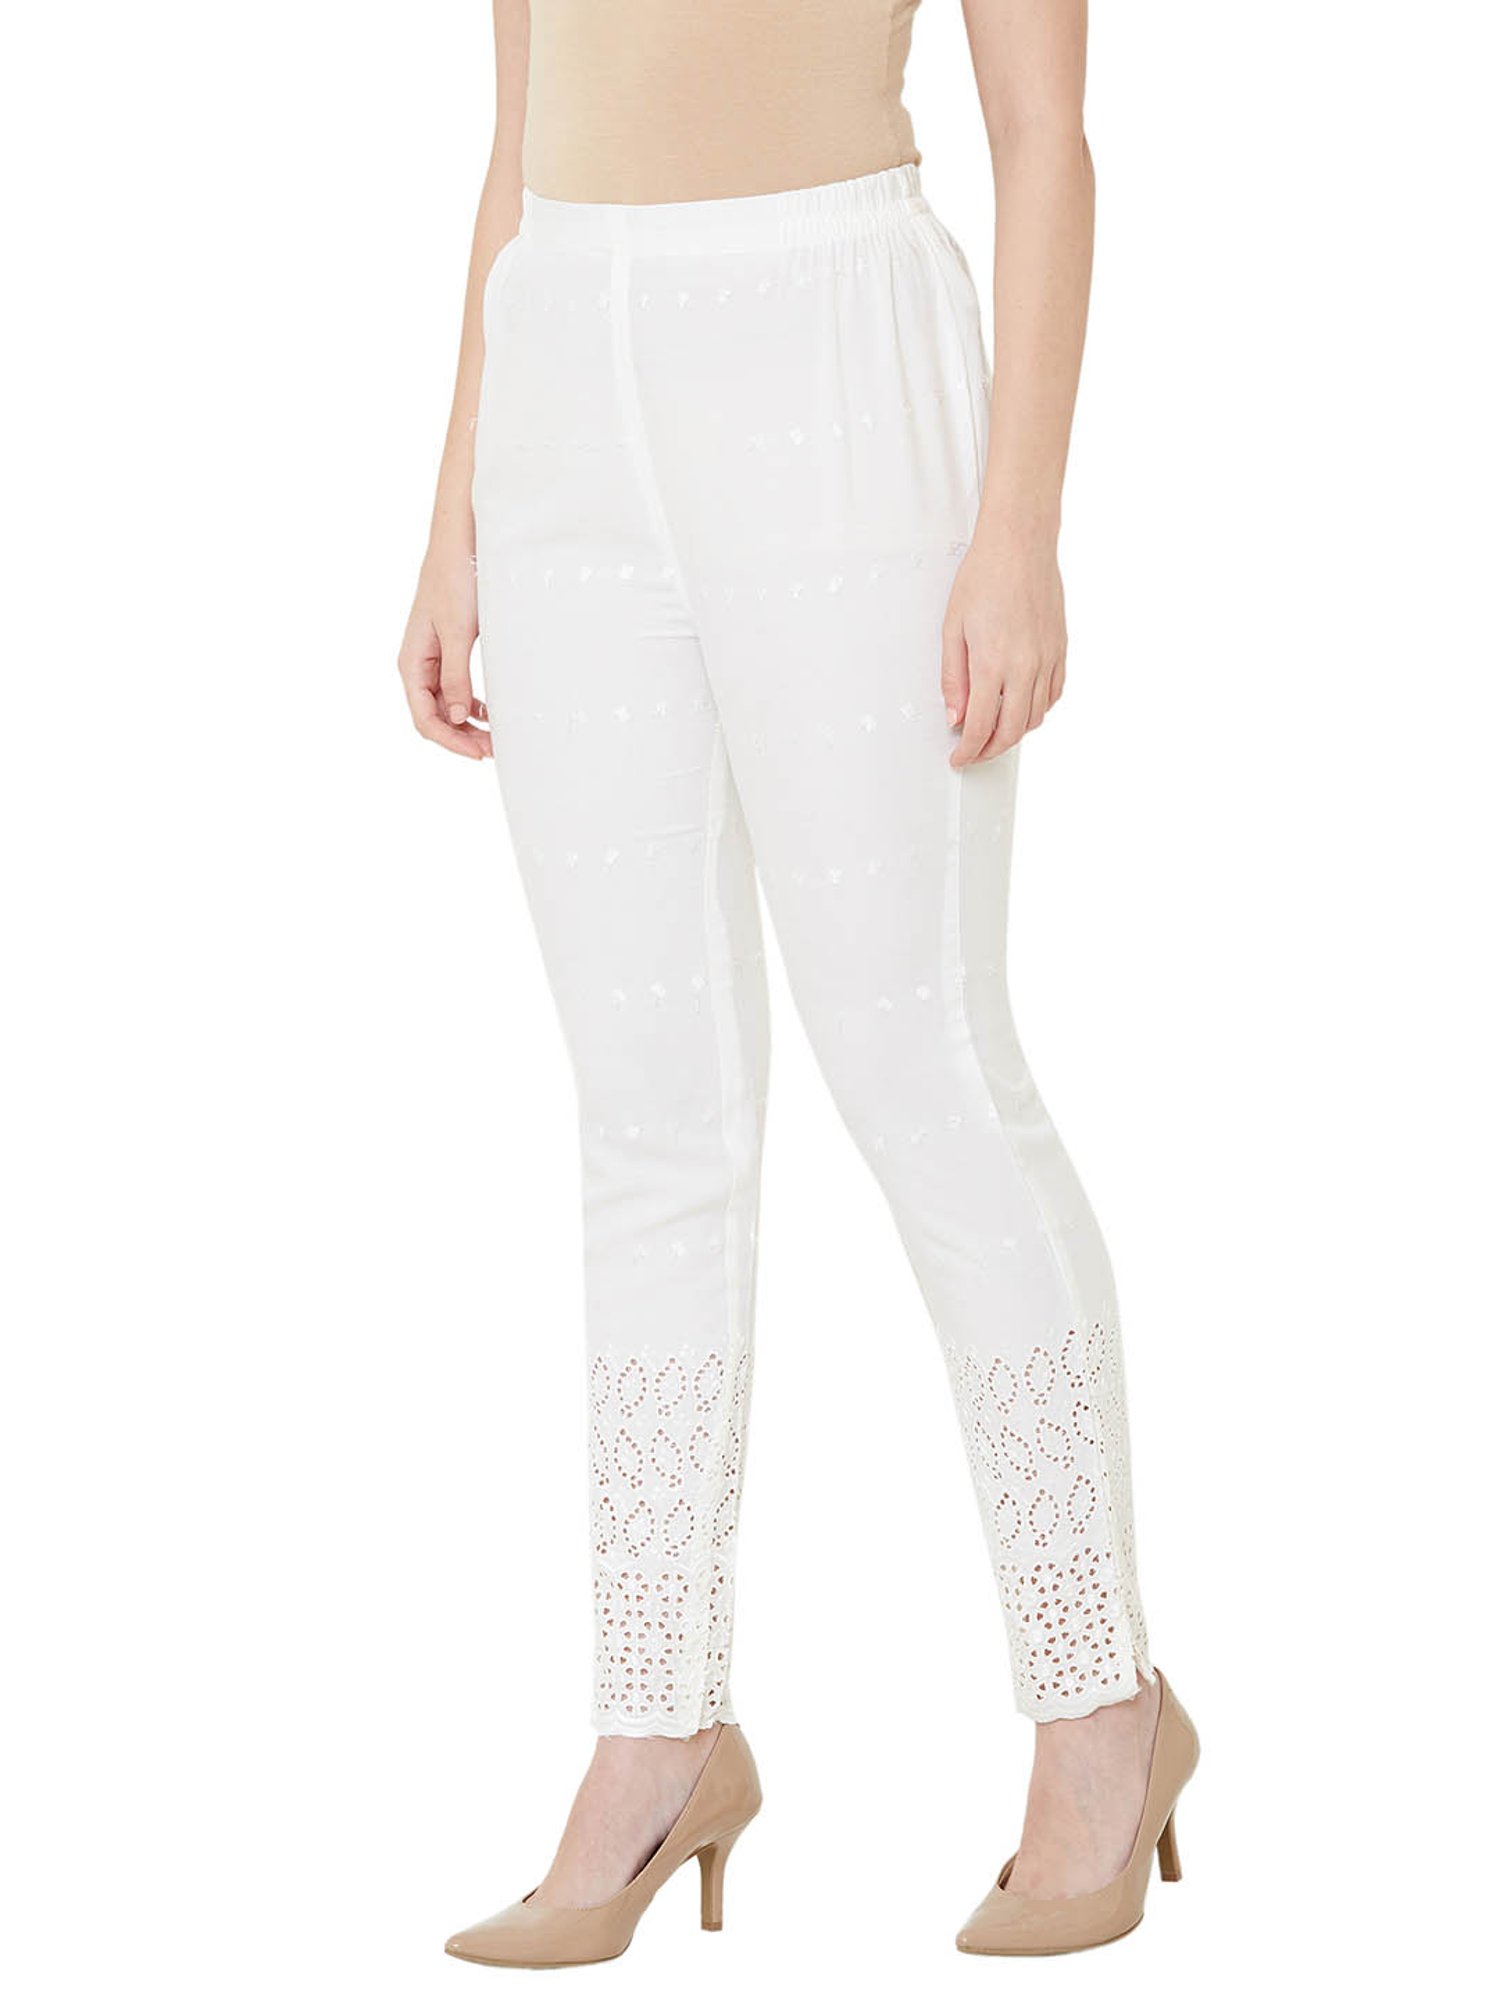 Buy Off White Pants for Women by Itse Online  Ajiocom